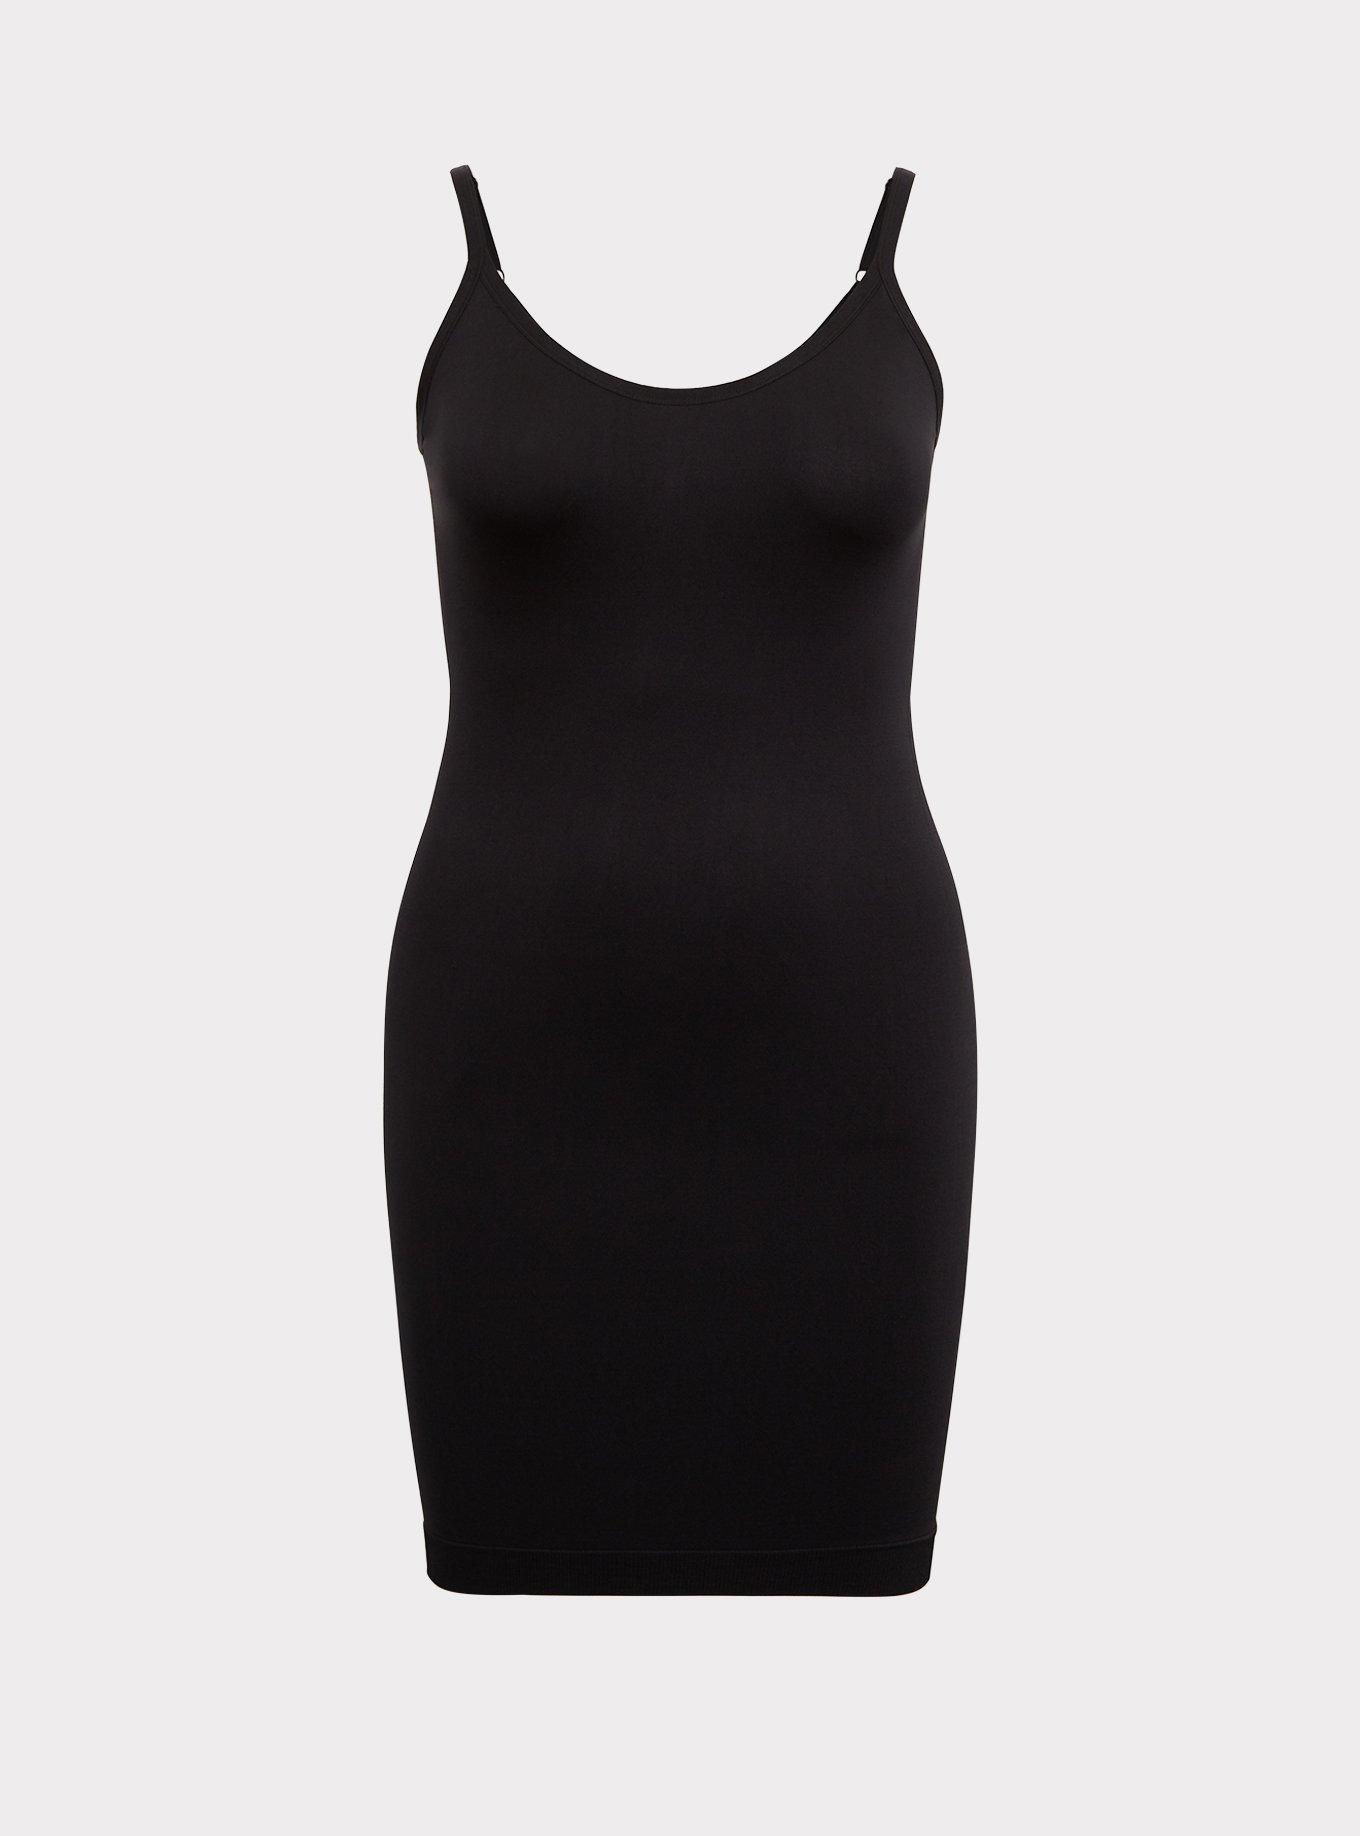 Plus Size Slip Dress for Women 2023 Spaghetti Strap Sun Tank Under